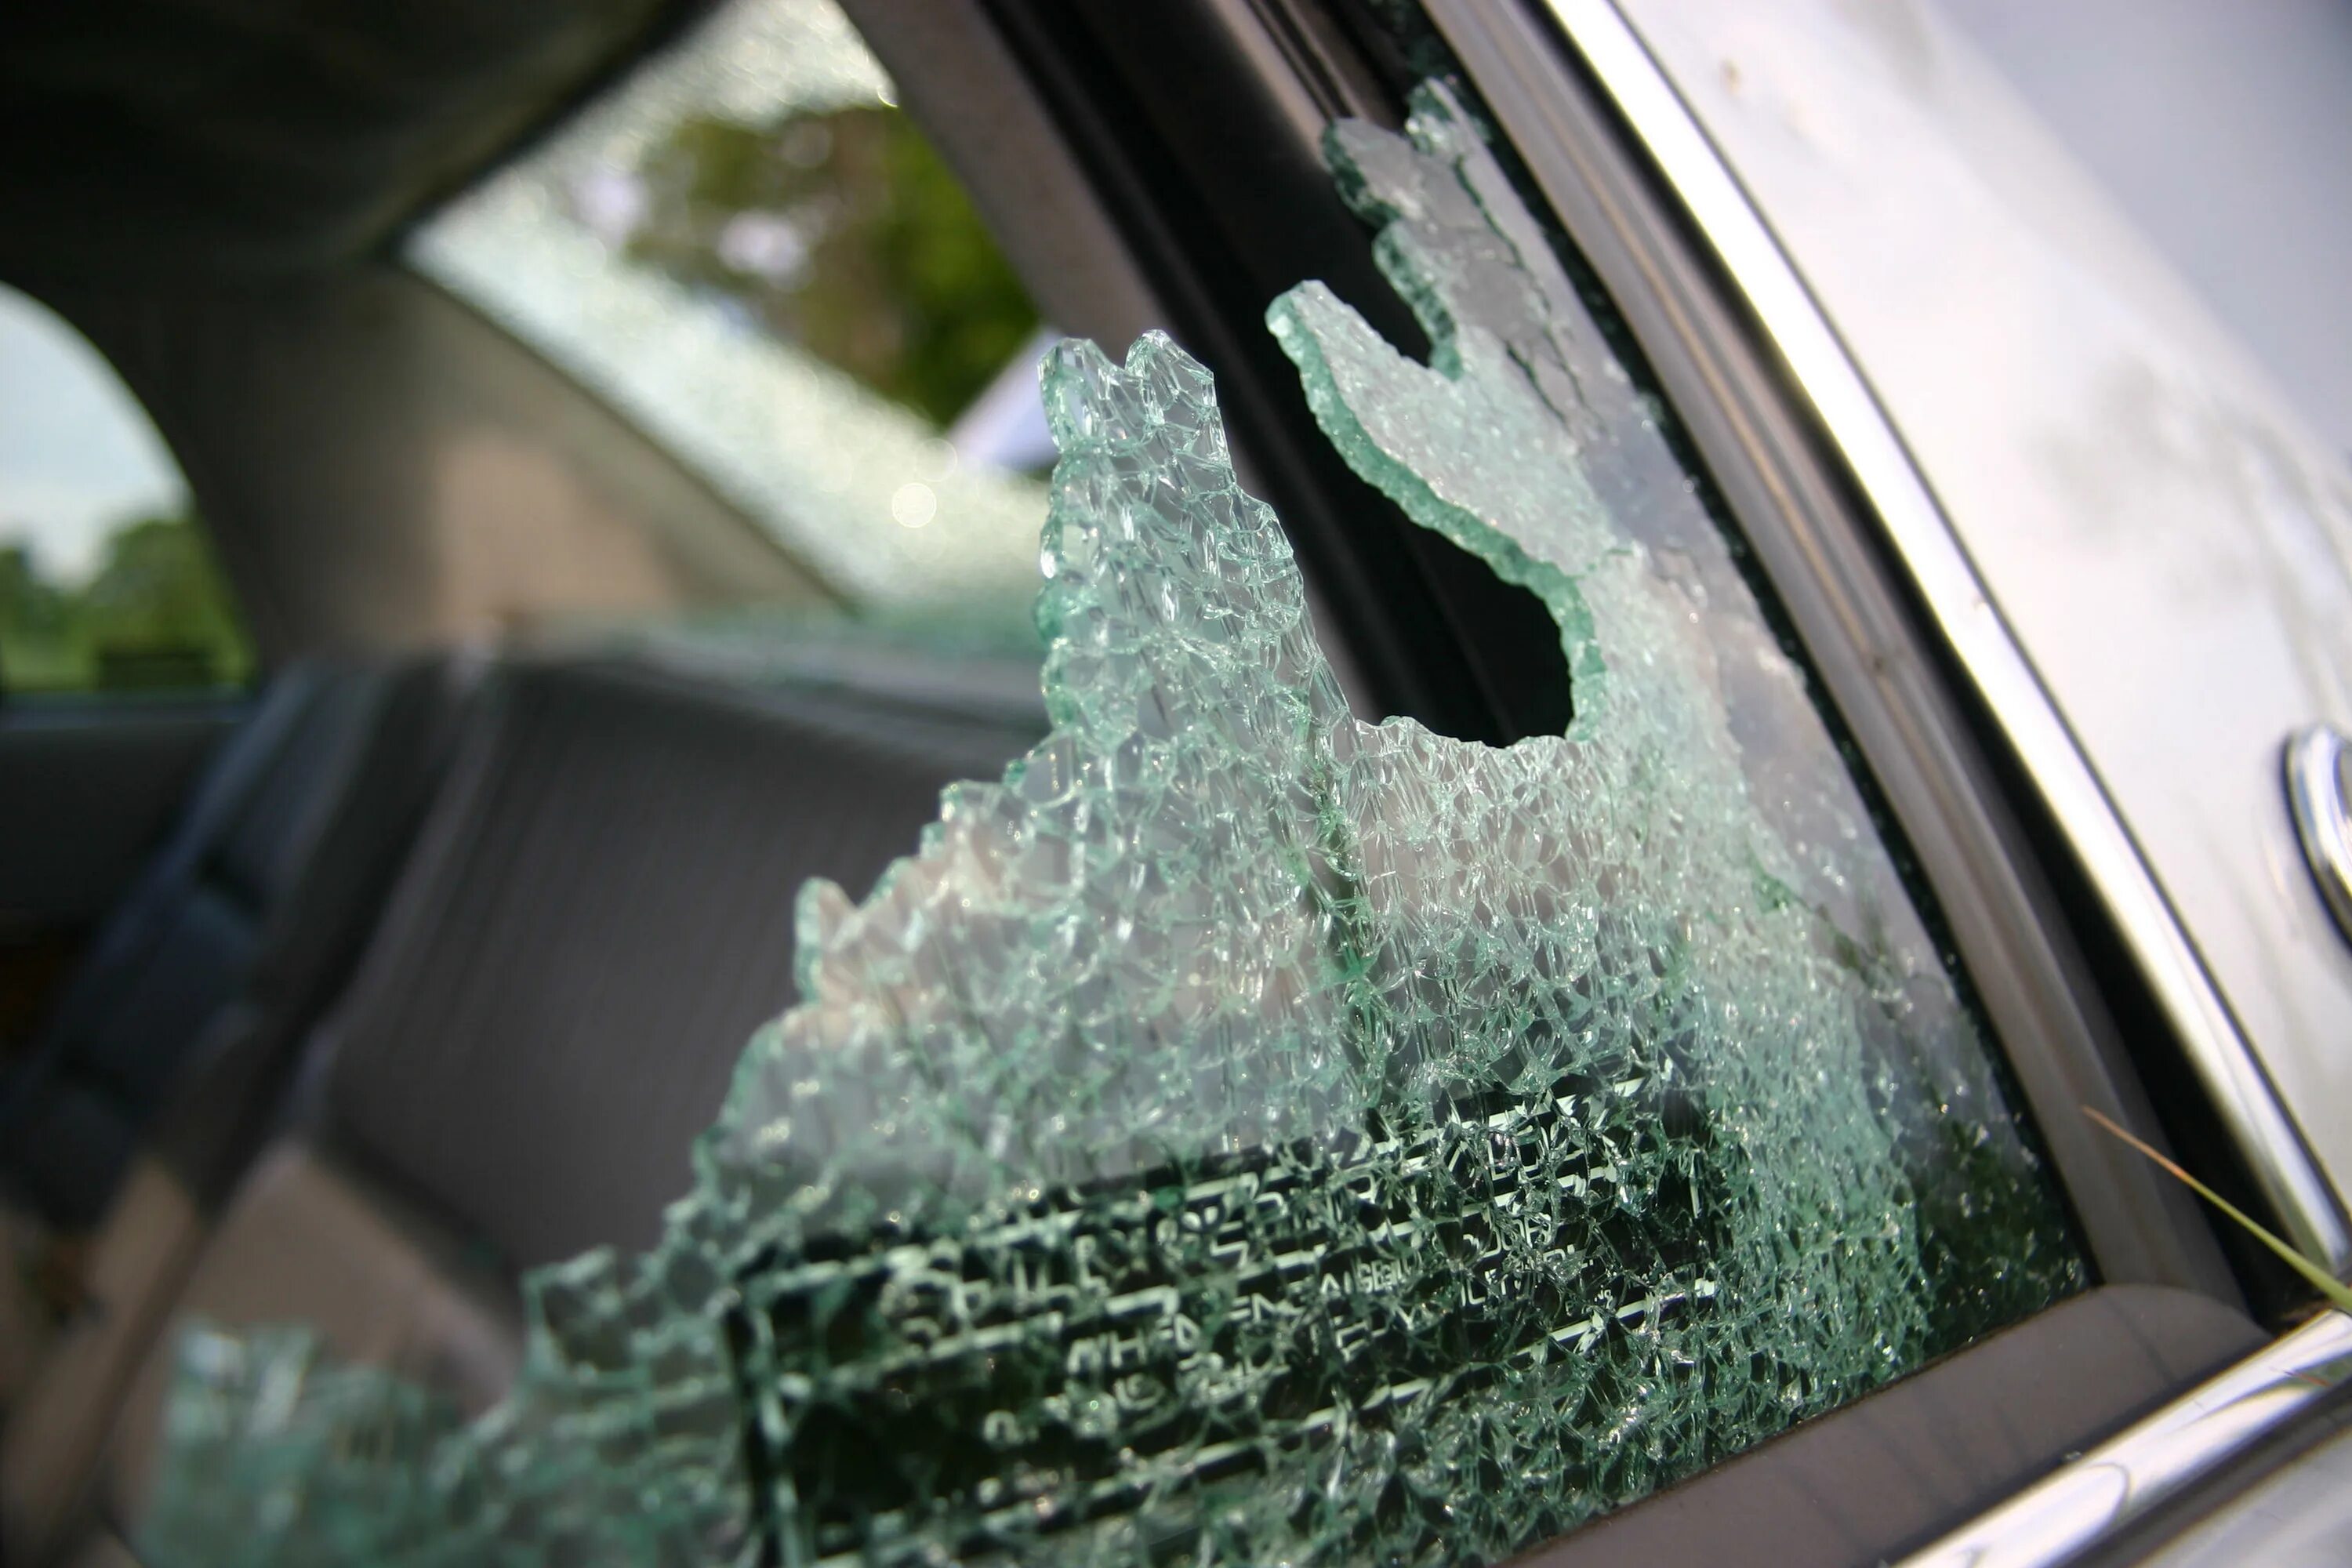 Разбиты окна машин. Разбитое стекло автомобиля. Разбитые стекла в автомобиле. Разбитое боковое стекло автомобиля. Разбивает стекло авто.